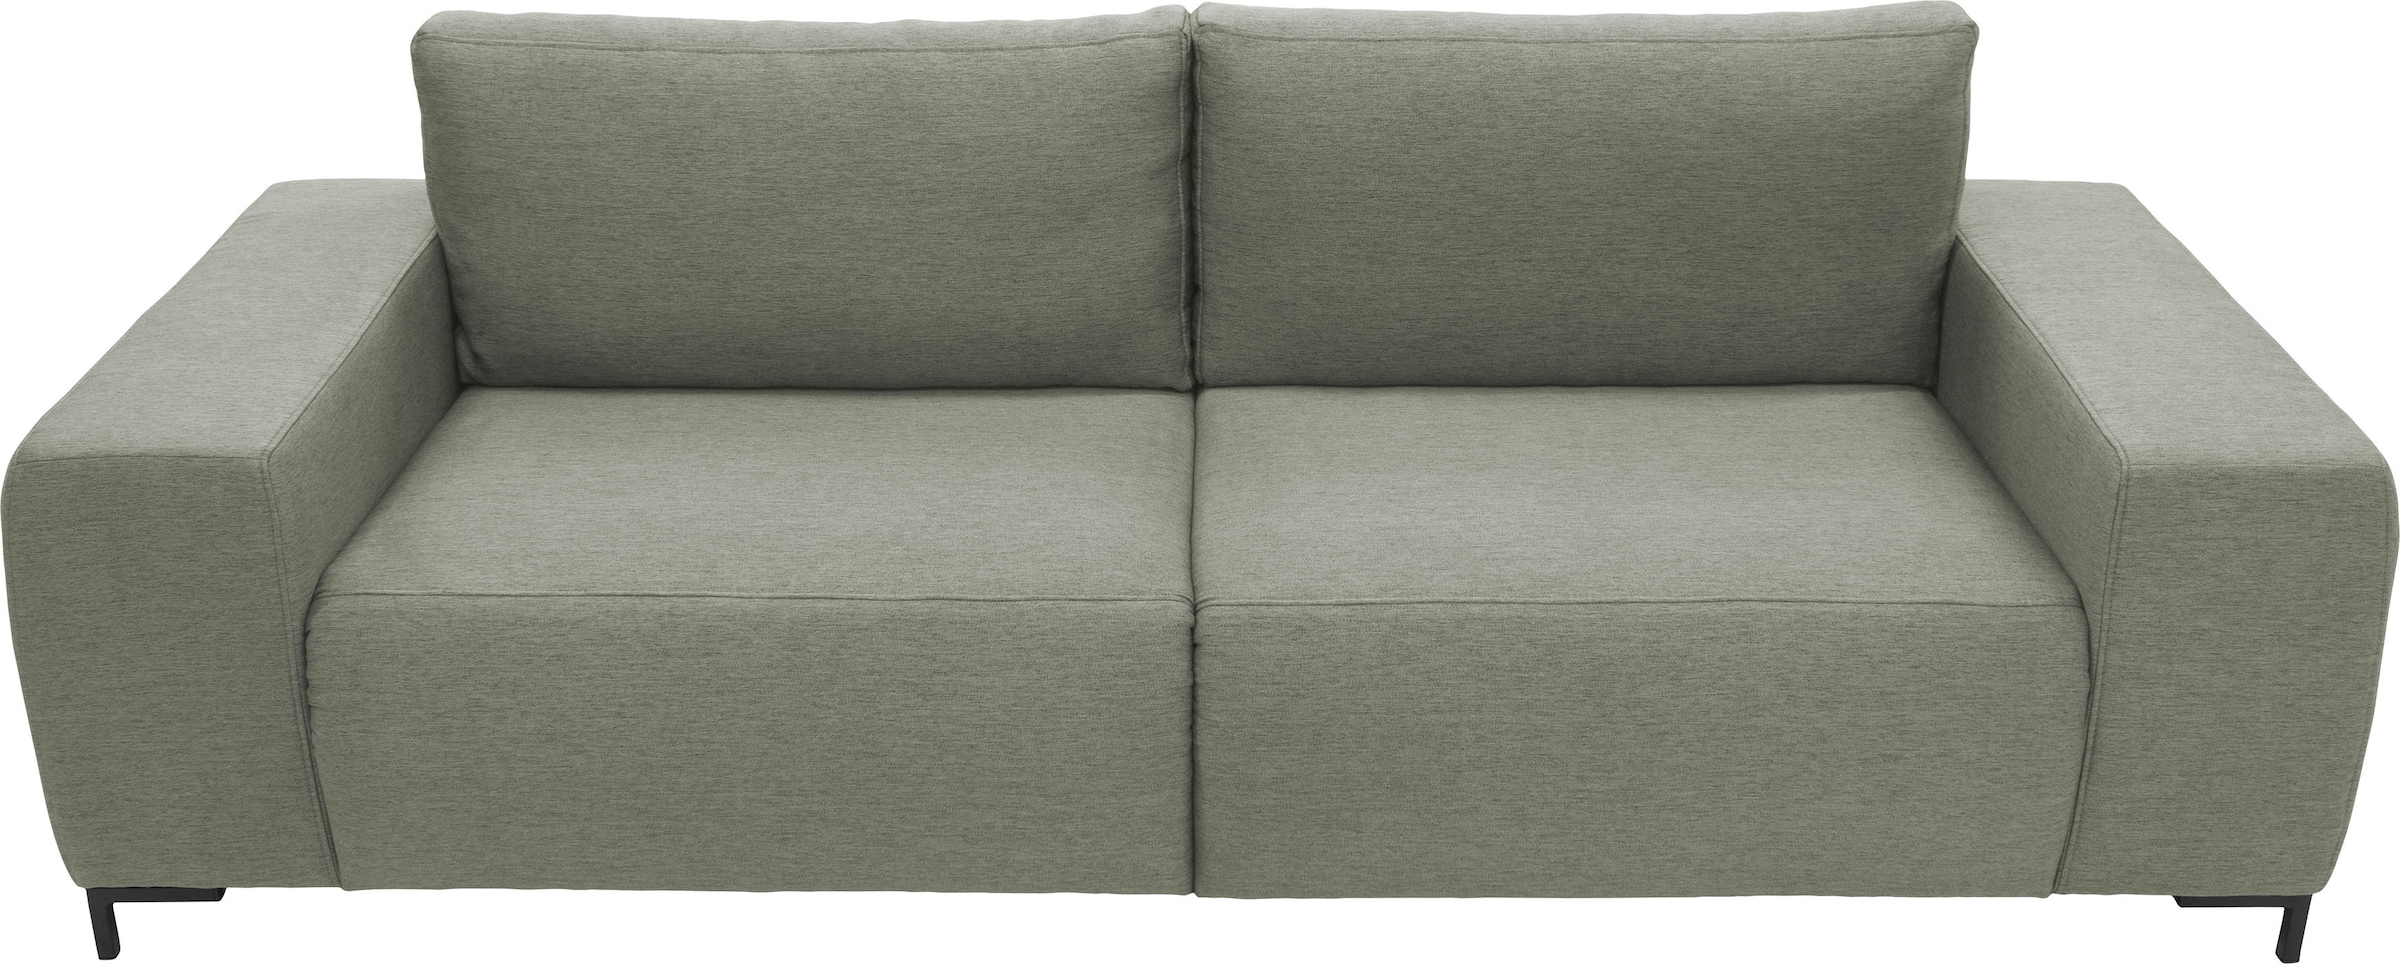 LOOKS by Wolfgang Joop Big-Sofa »Looks VI«, gerade Linien, in 2 Bezugsqualitäten